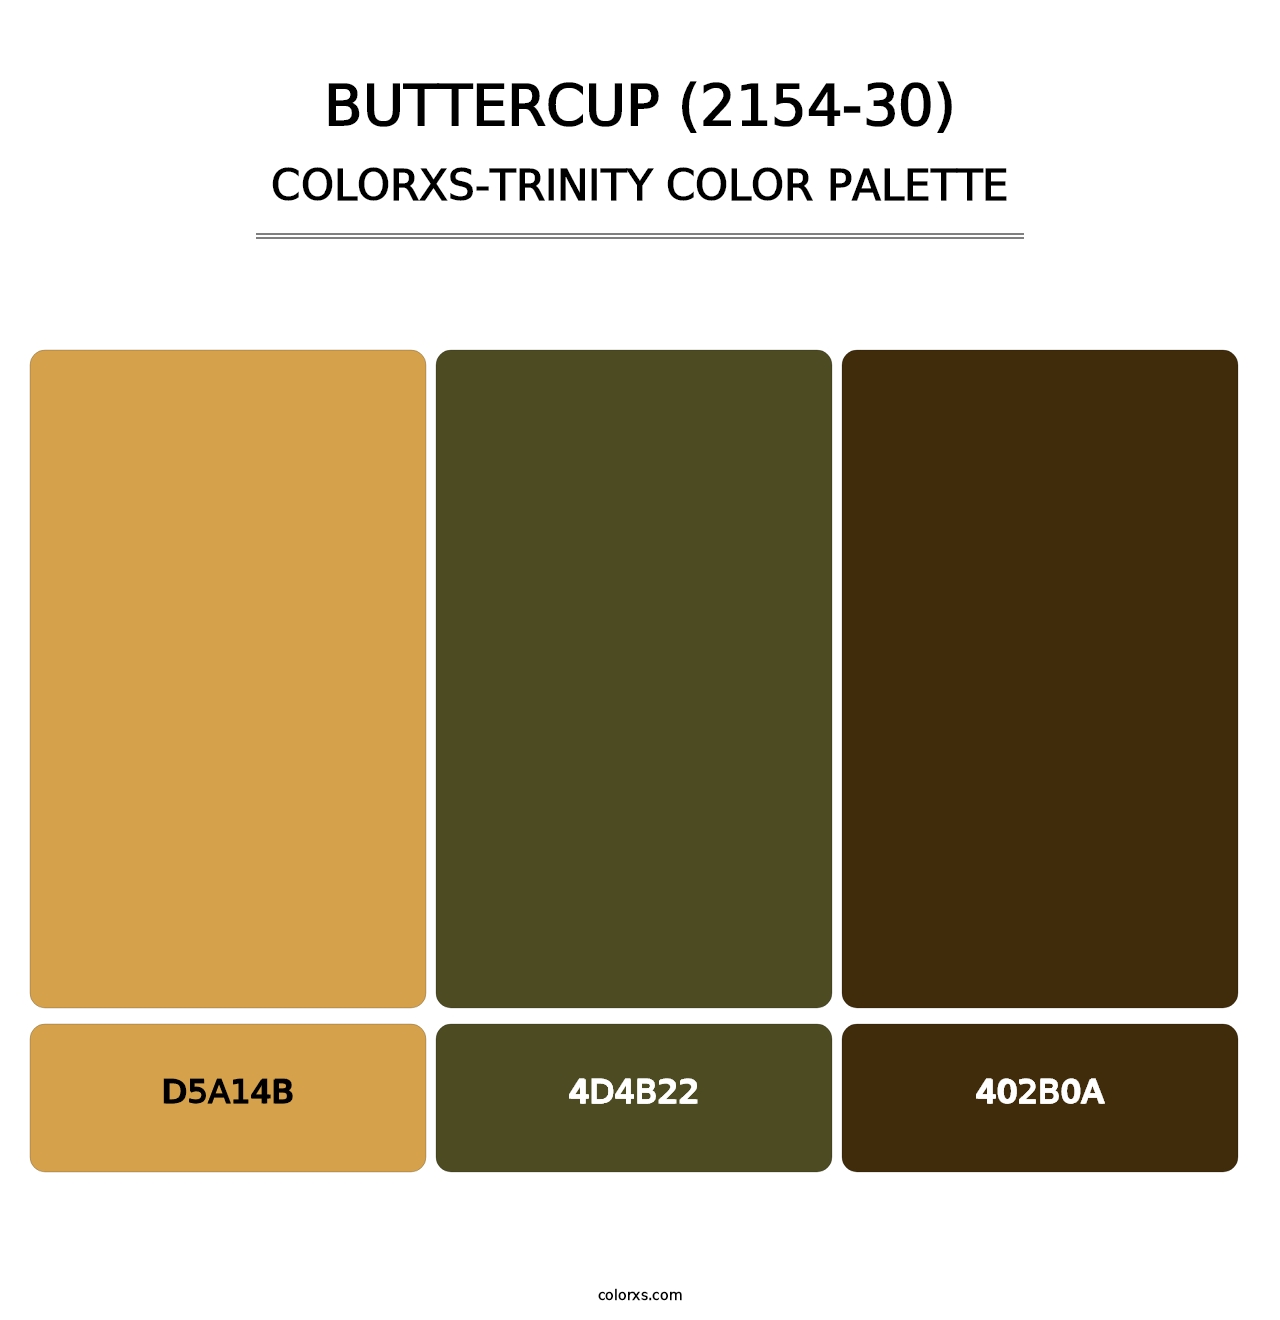 Buttercup (2154-30) - Colorxs Trinity Palette